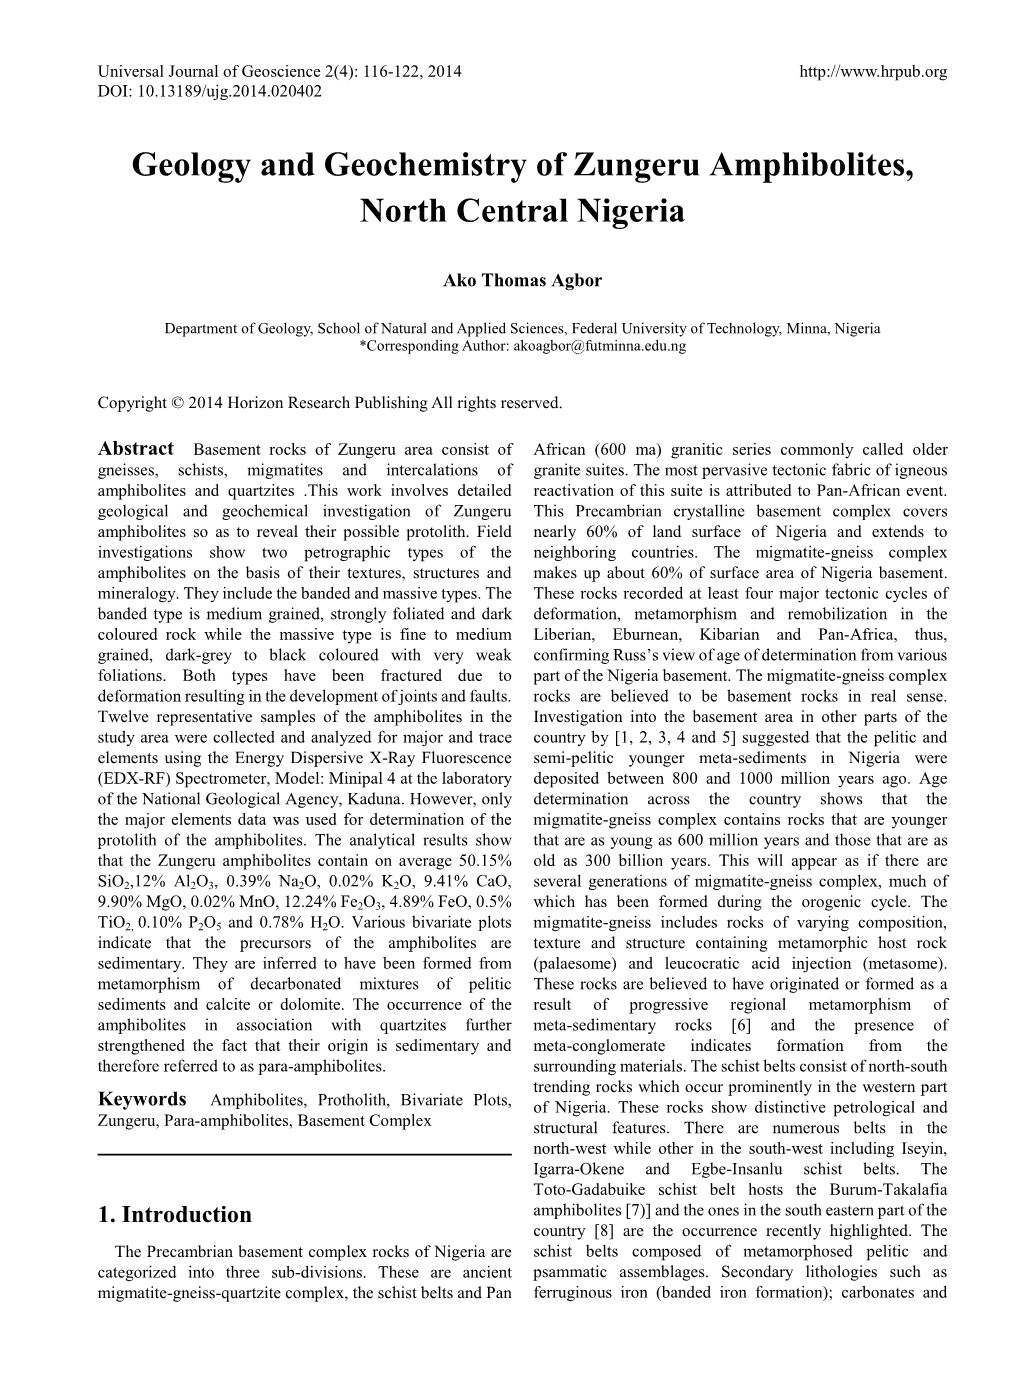 Geology and Geochemistry of Zungeru Amphibolites, North Central Nigeria